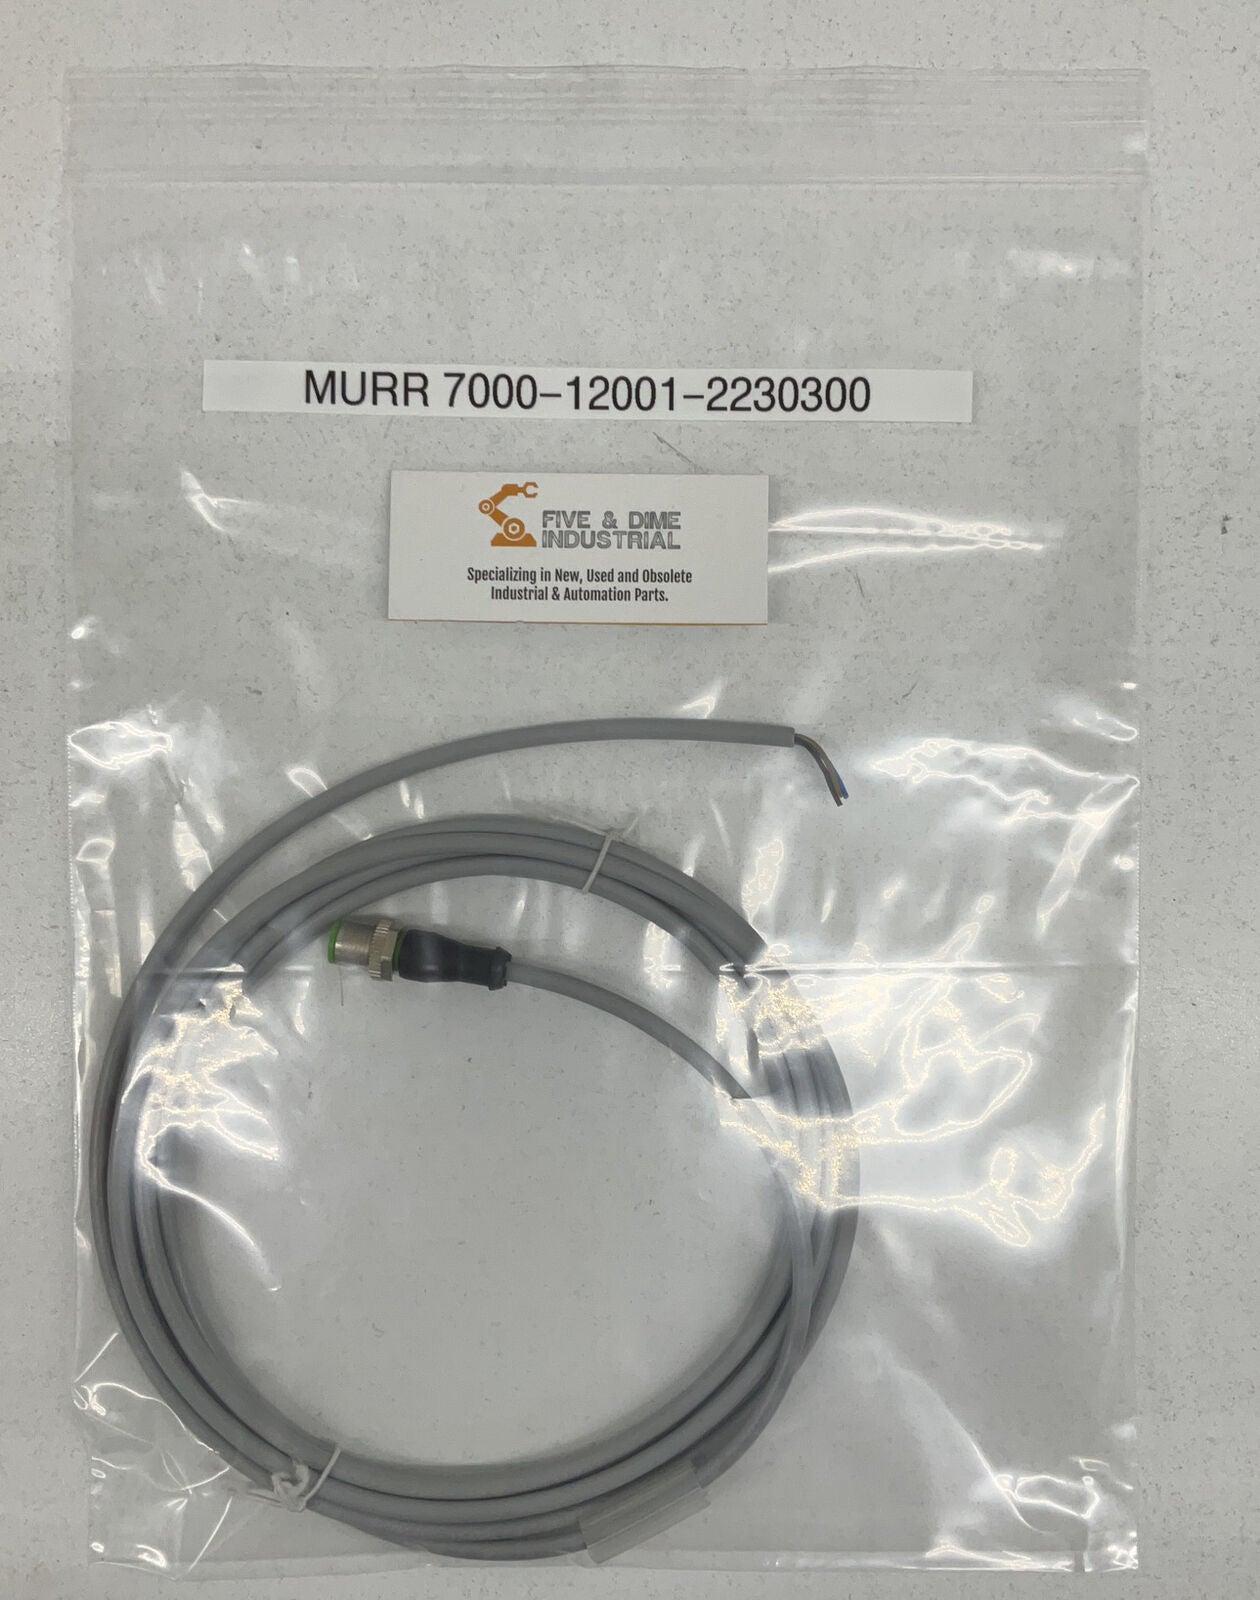 MURR Elektronik 7000-12221-2230300 New M12 Male Cable (CBL123)